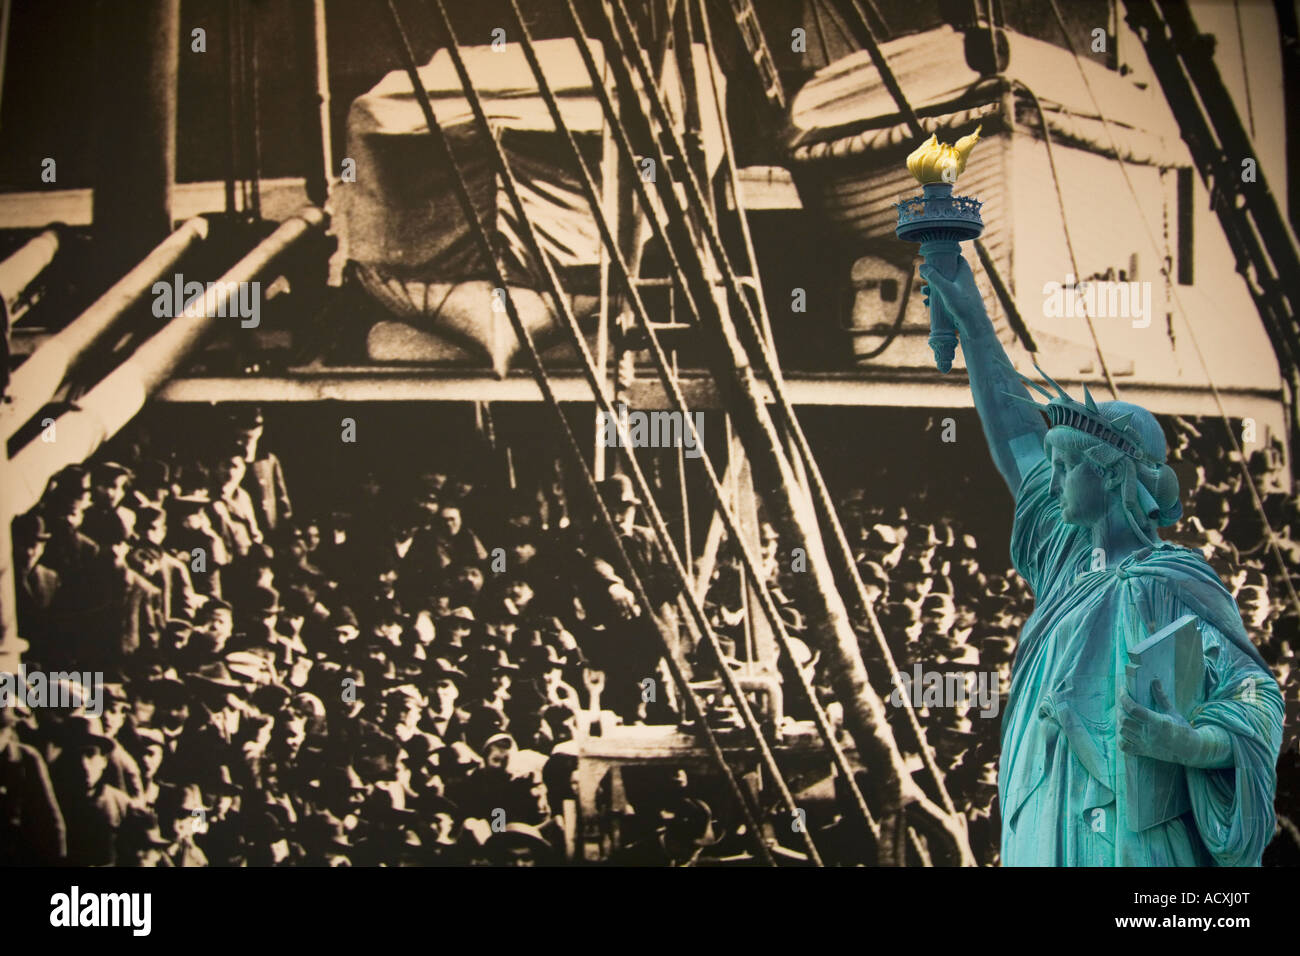 Freiheitsstatue Liberty Einwanderung Einwanderer Komposit Lady Liberty begrüßt Einwanderer aus Europa nach New York Harbor Hafen NY Stockfoto